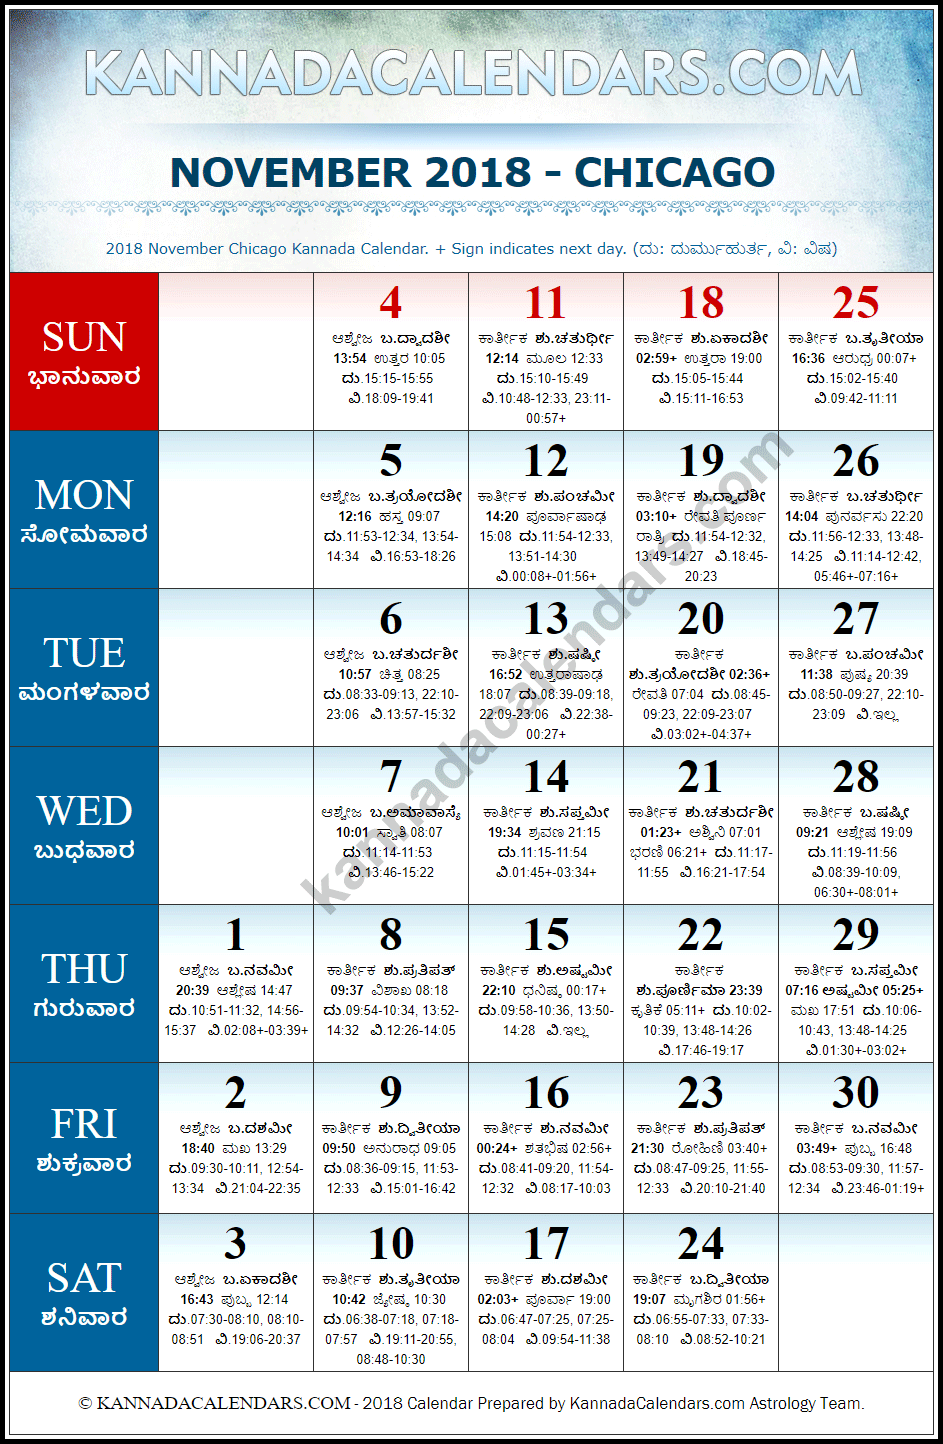 November 2018 Kannada Calendar for Chicago, USA